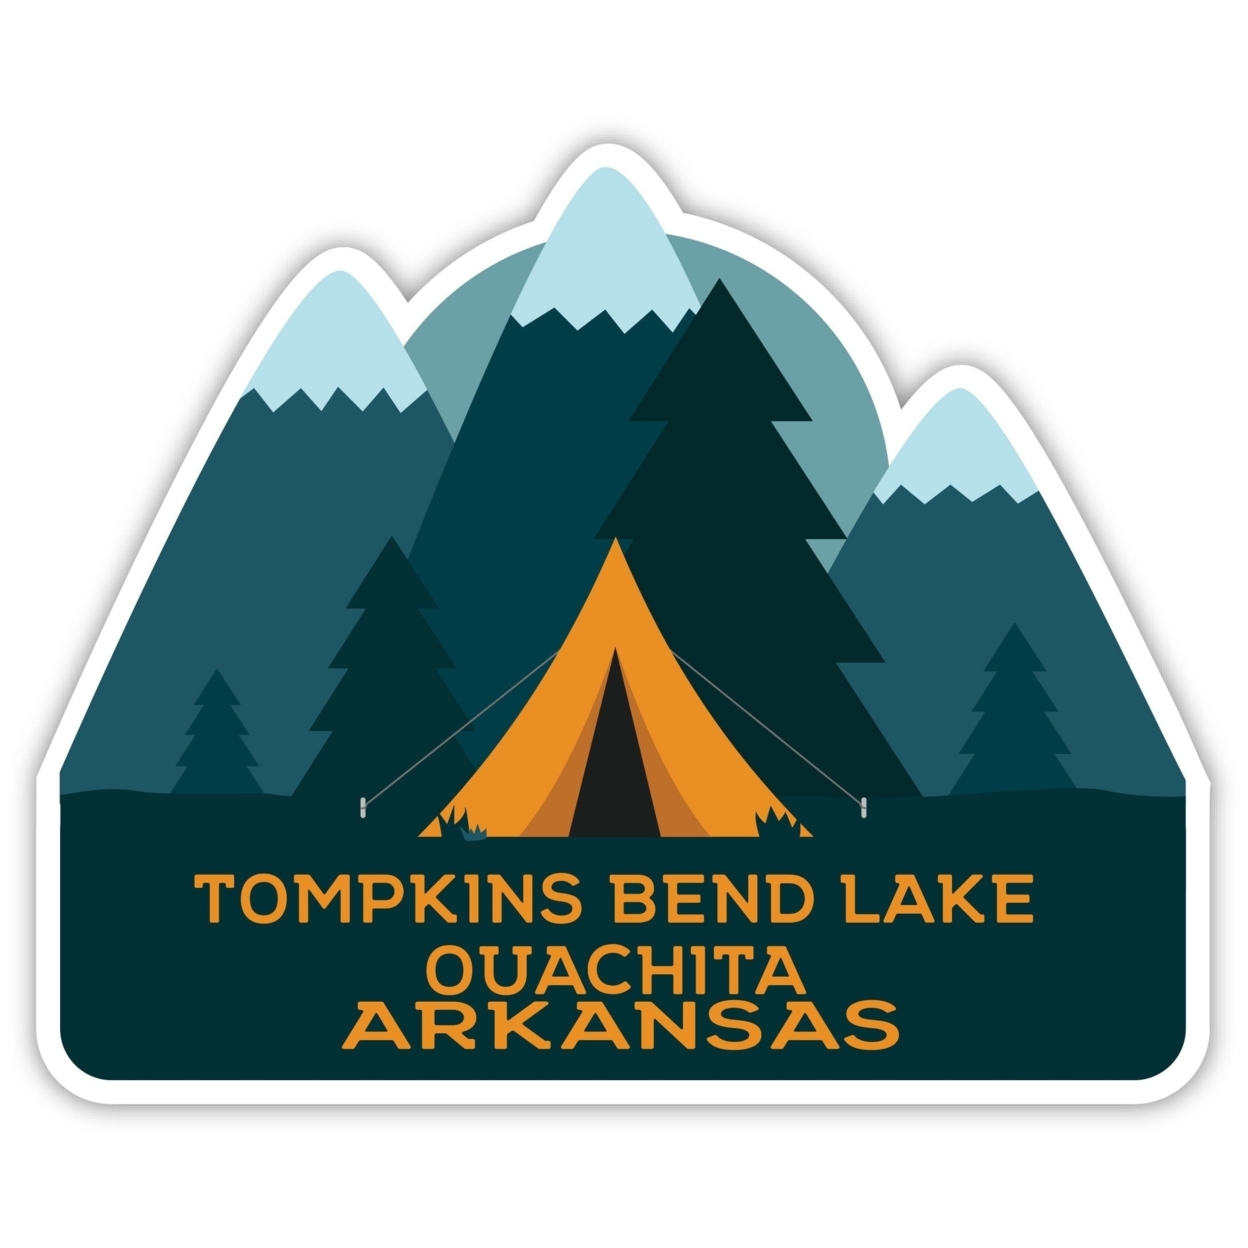 Tompkins Bend Lake Ouachita Arkansas Souvenir Decorative Stickers (Choose Theme And Size) - Single Unit, 4-Inch, Tent